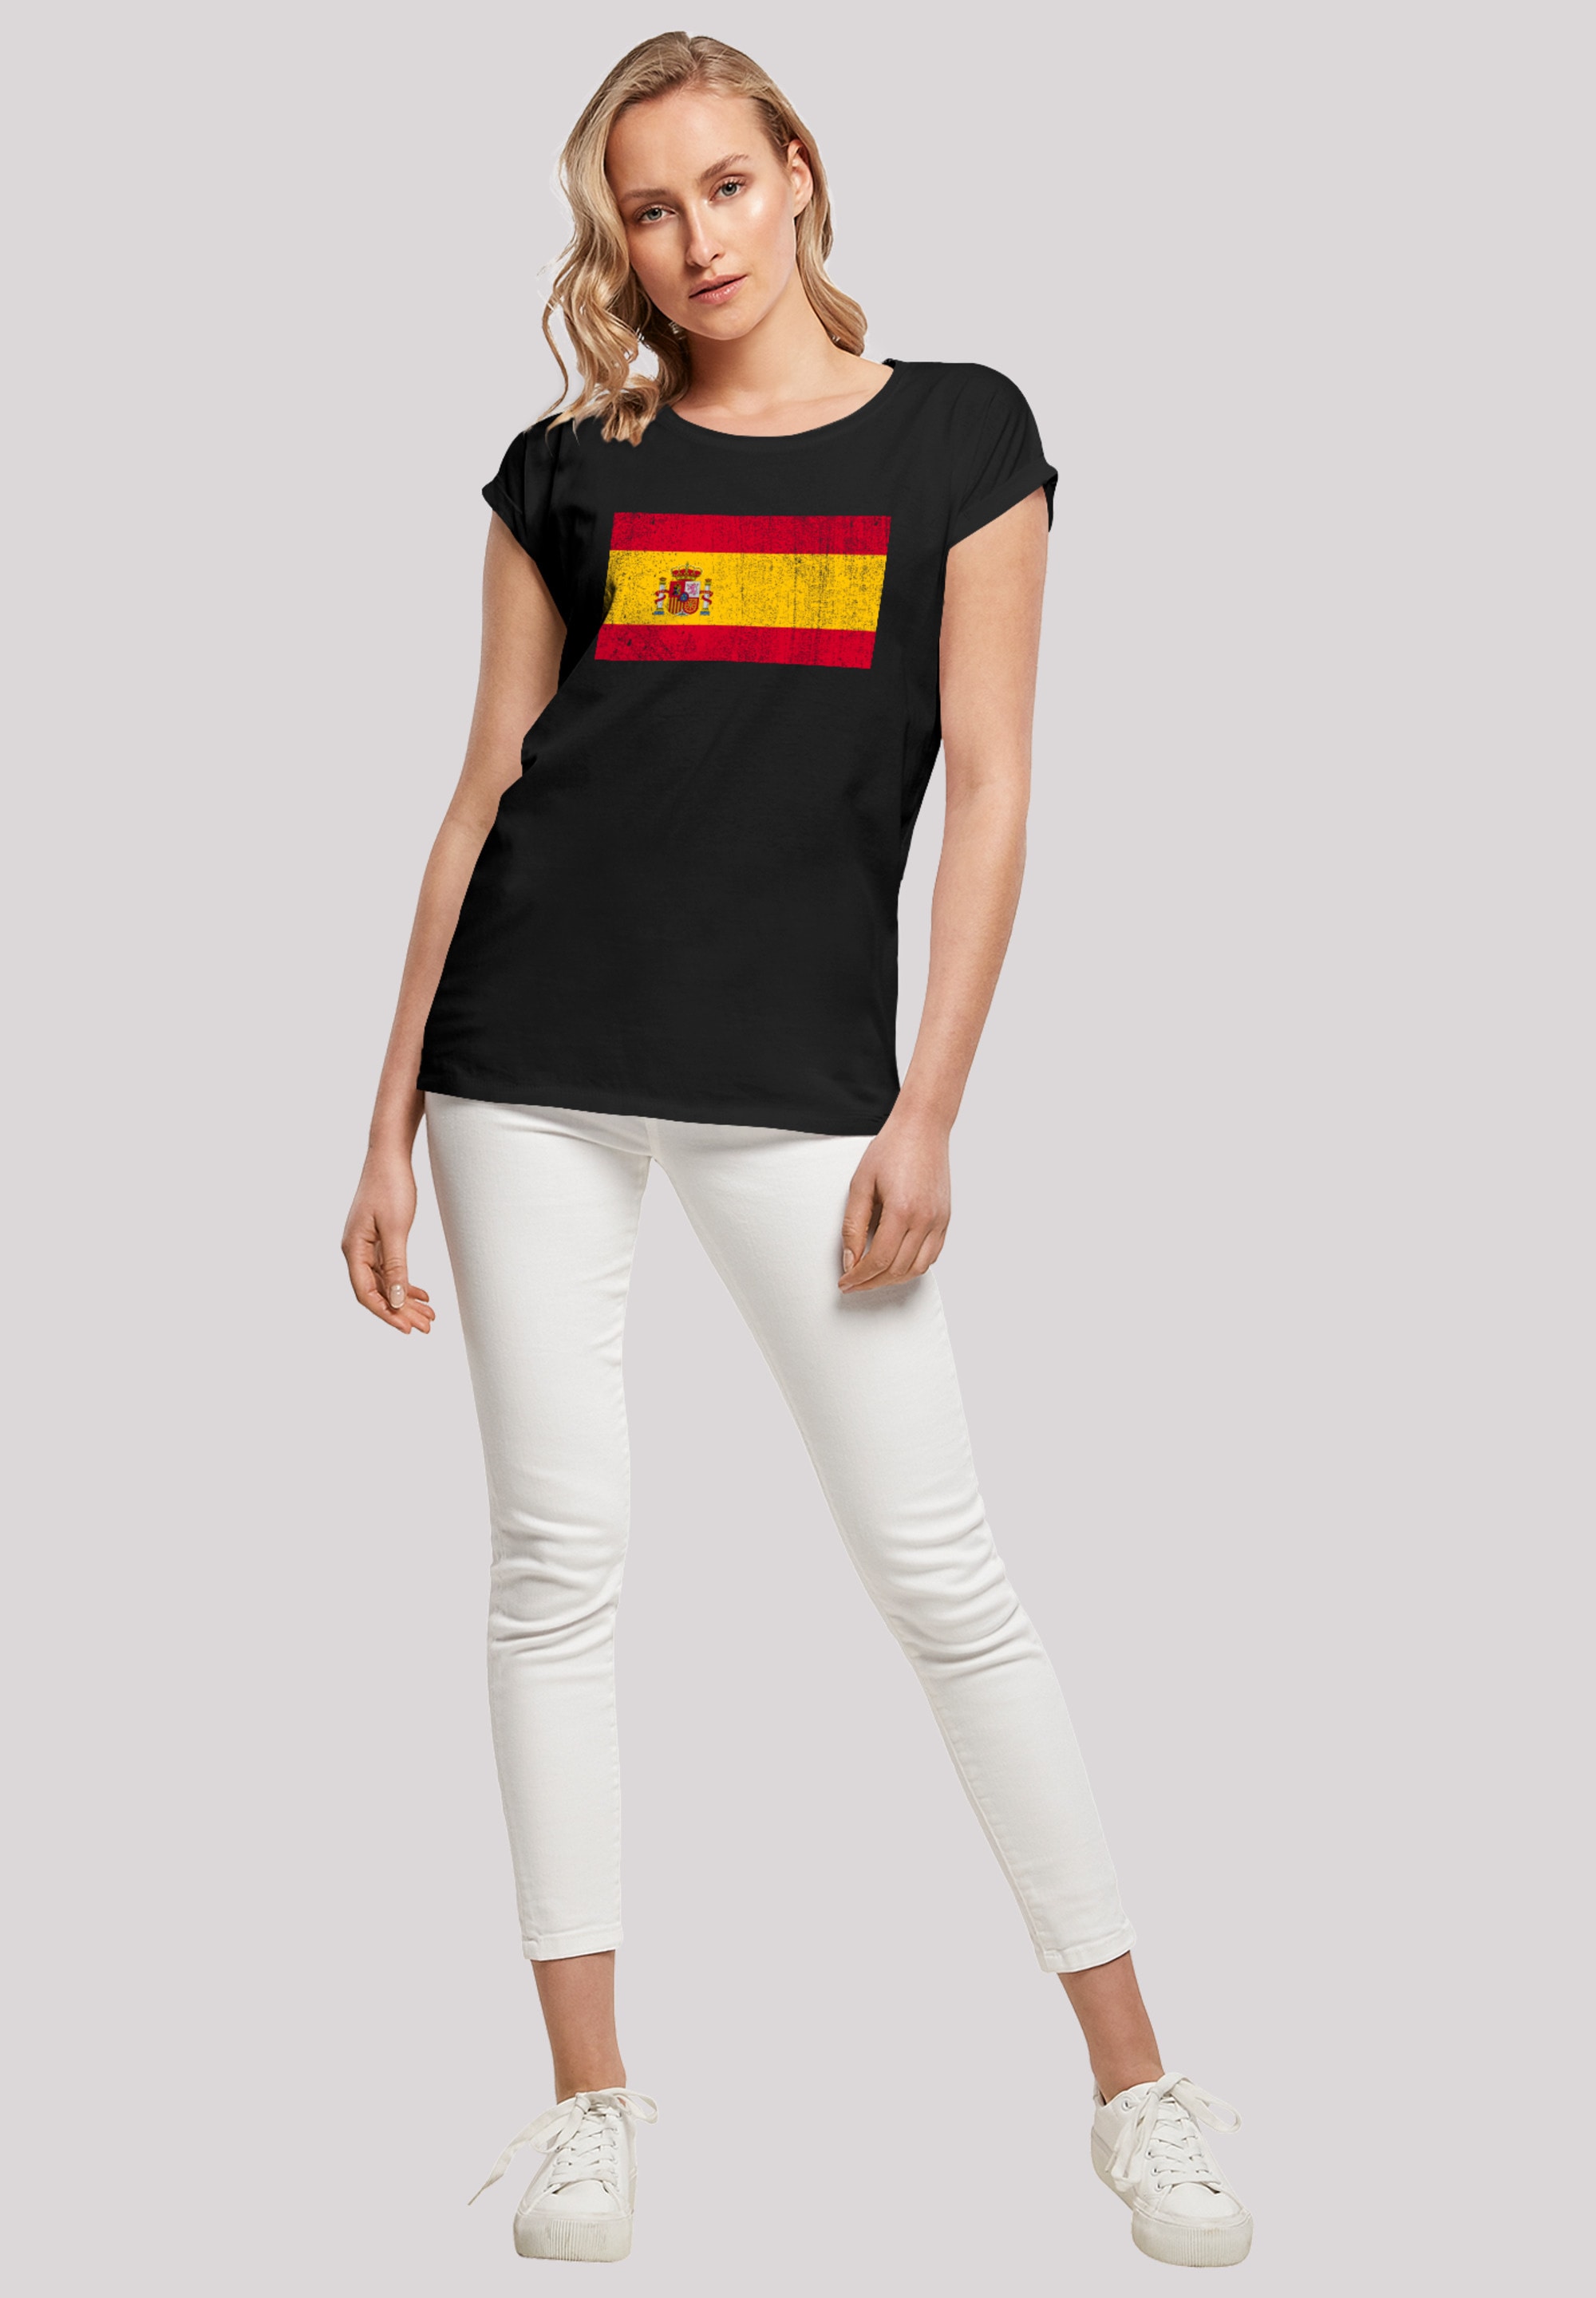 Print F4NT4STIC distressed«, »Spain bestellen Flagge T-Shirt Spanien